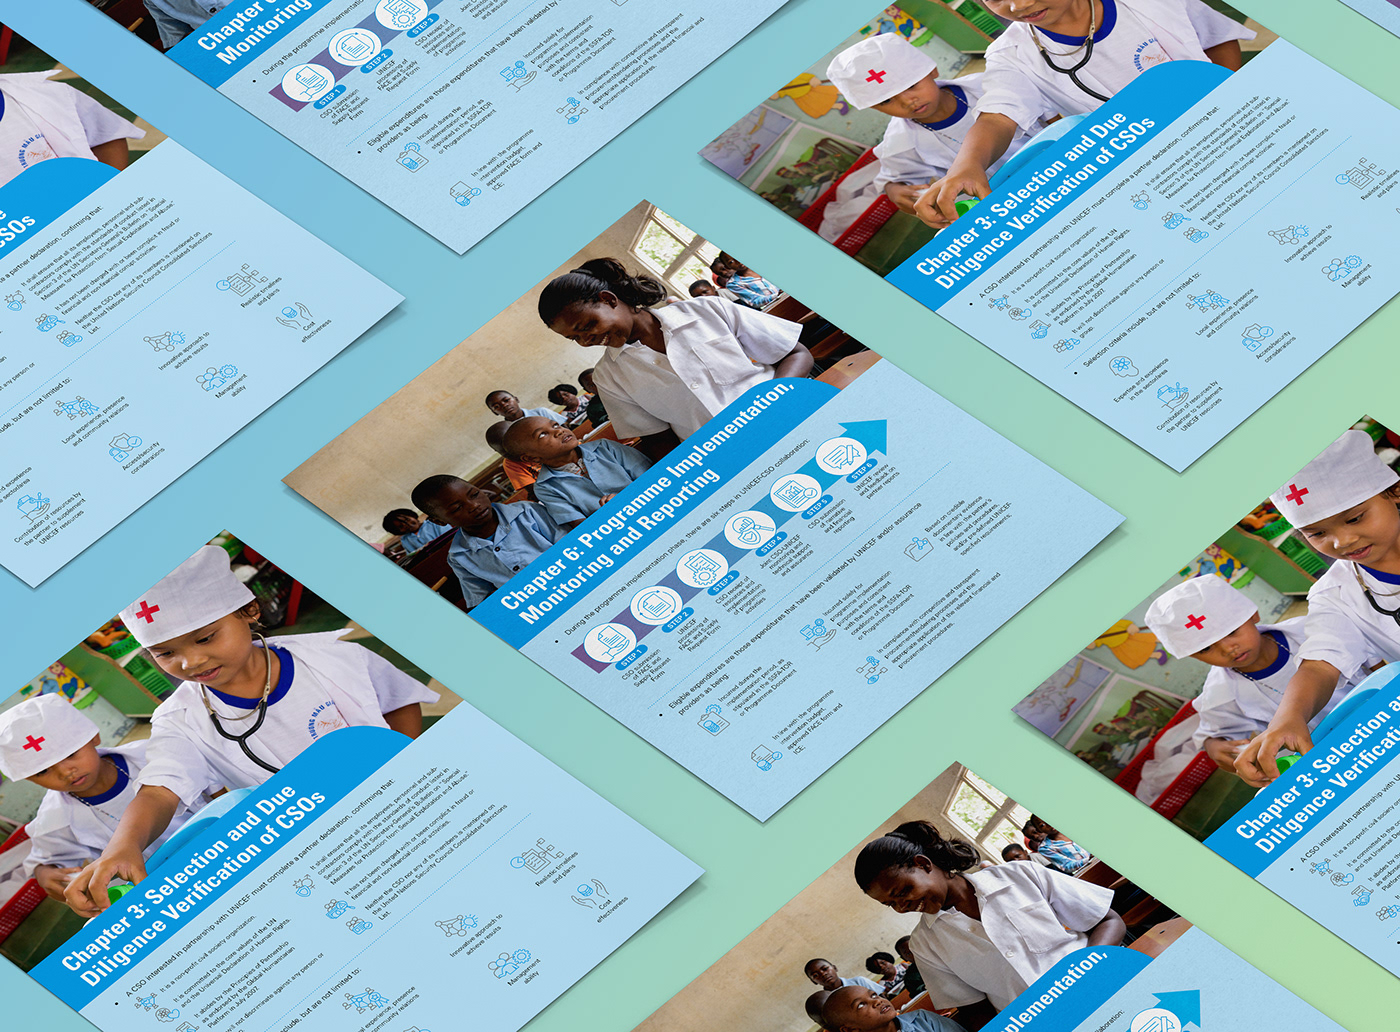 brochure children civil society data visualization infographic partnership report unicef United Nations 平面设计